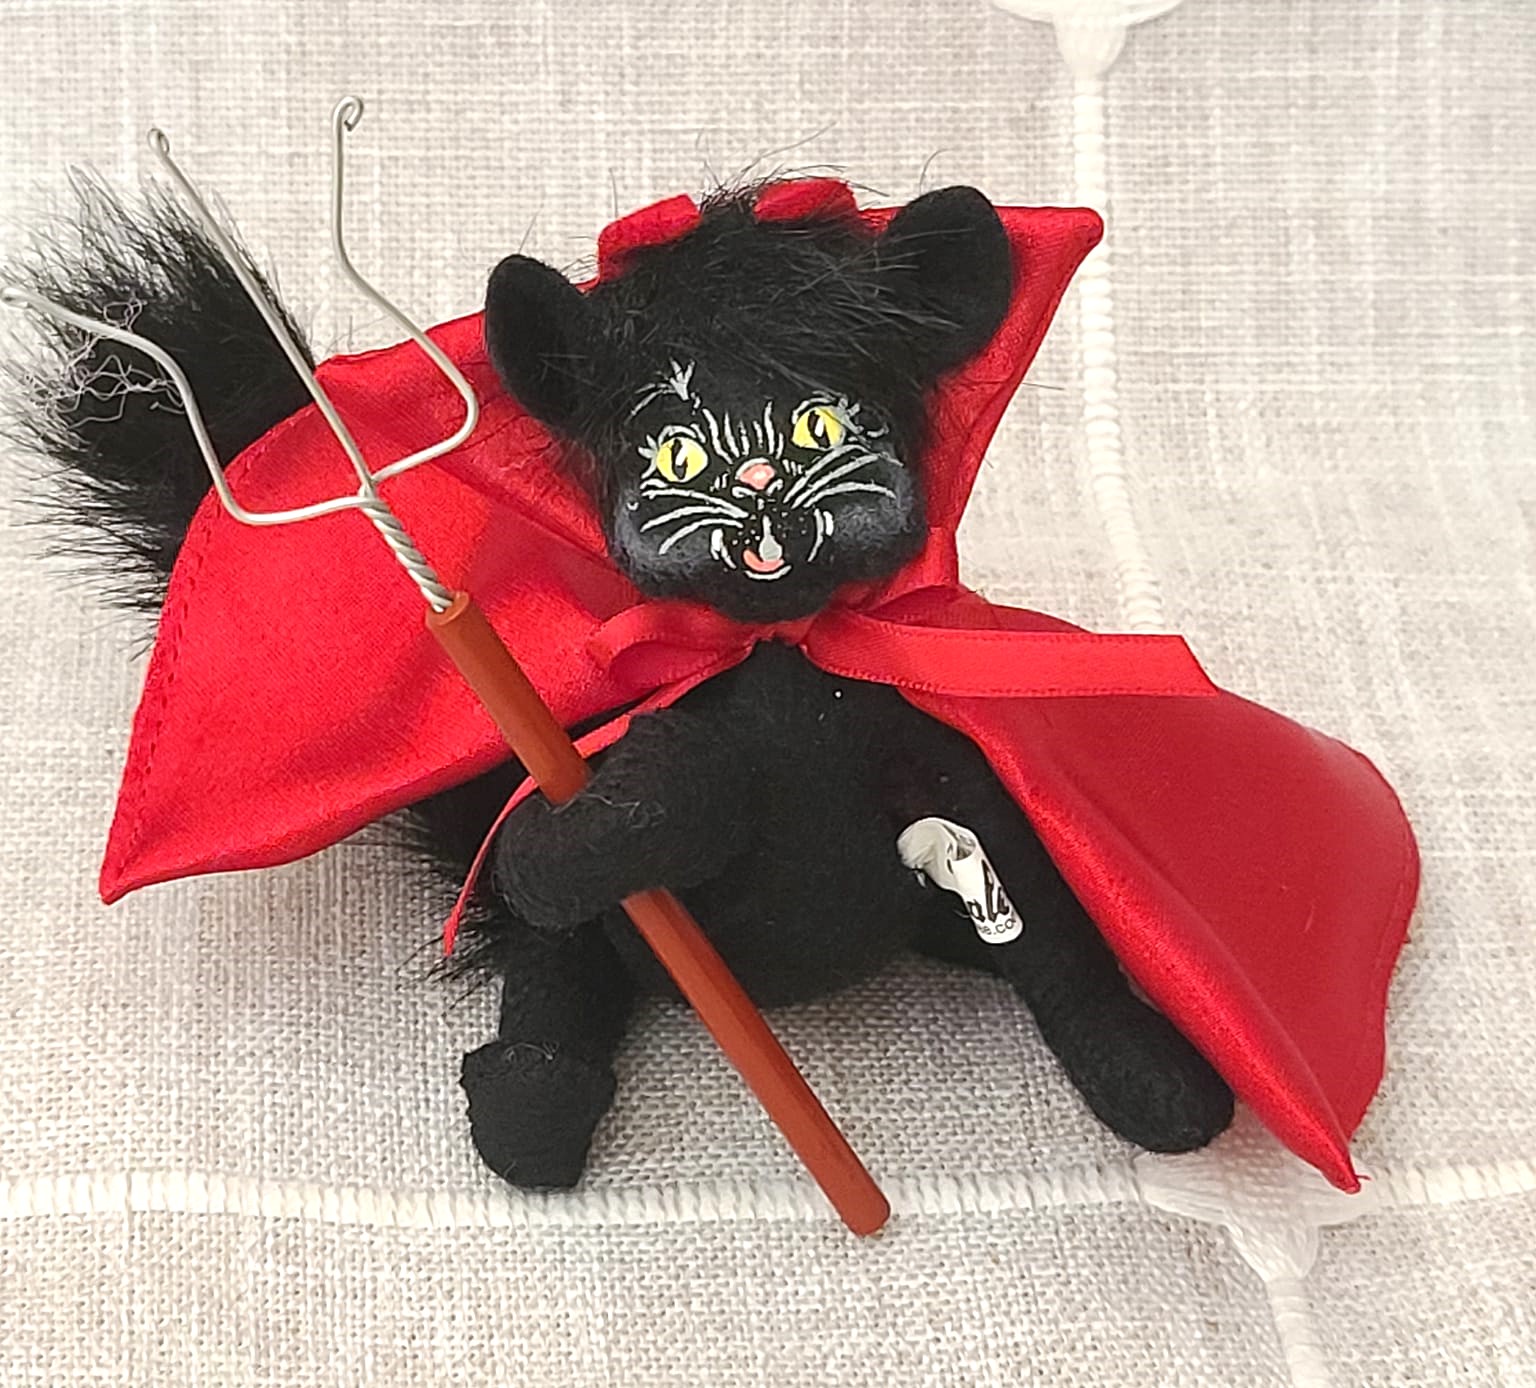 Annalee Halloween vampire black cat with felt figure